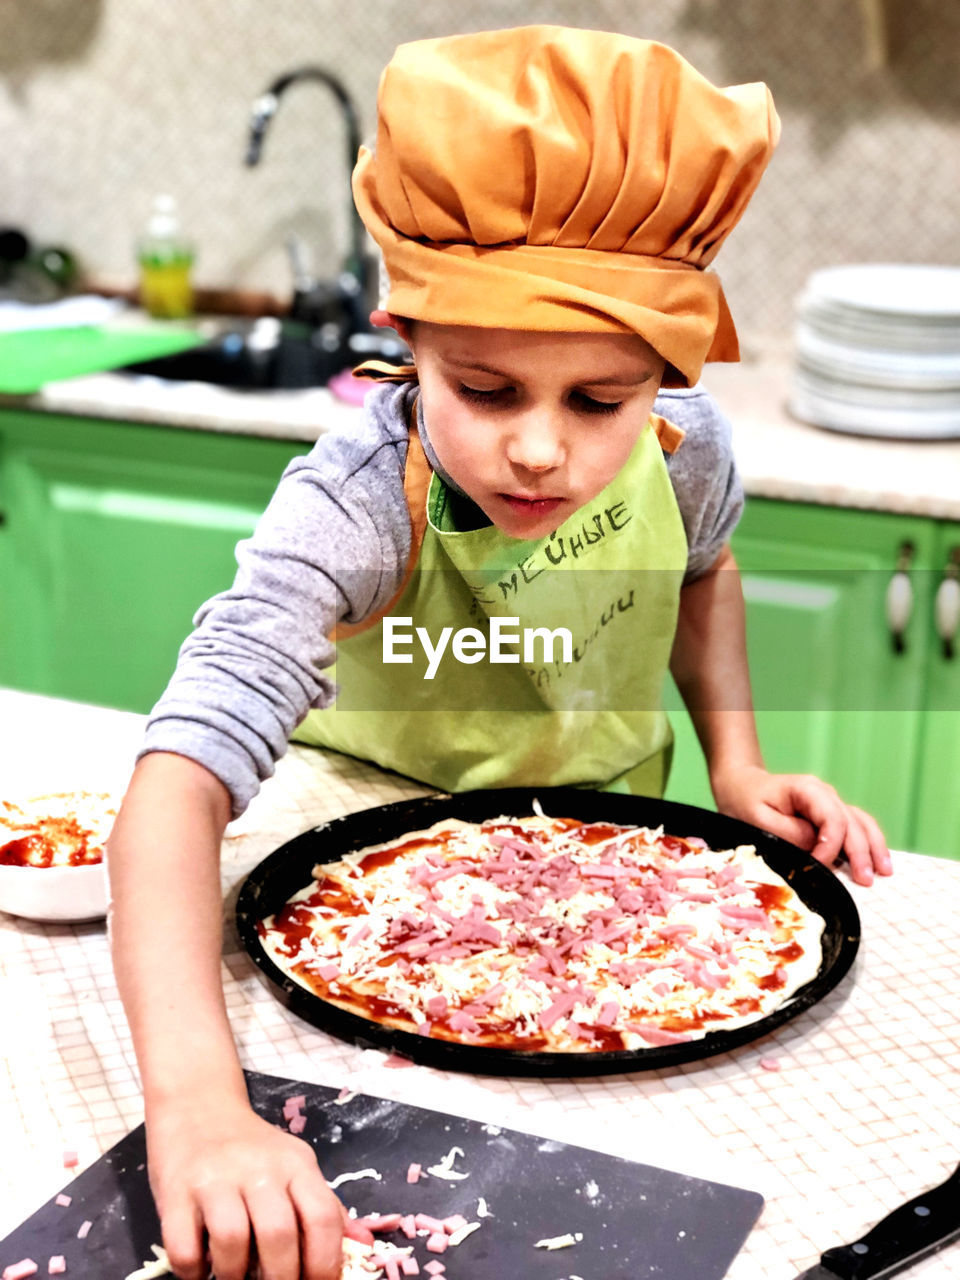 Boy preparing pizza at home